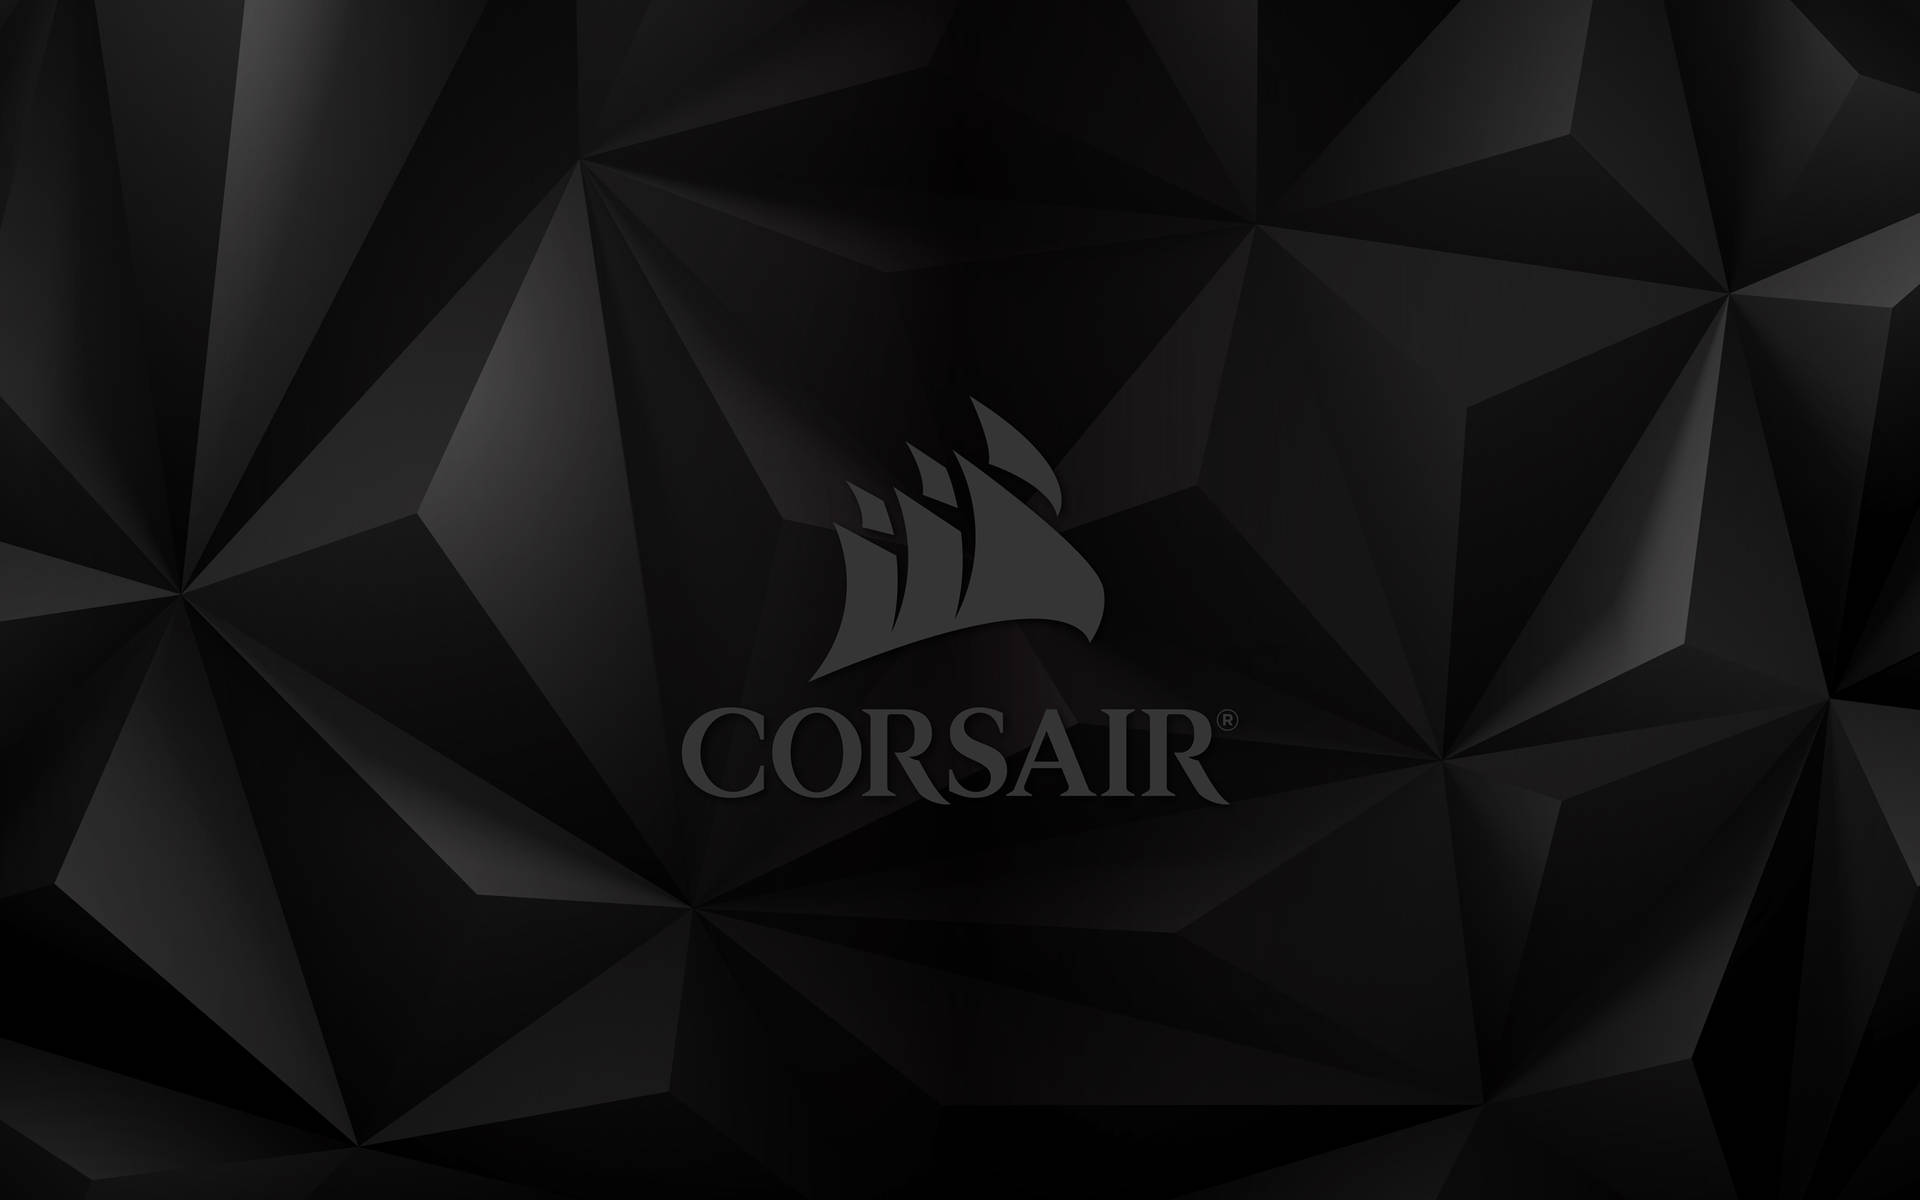 Corsair Gamer Logo Picture